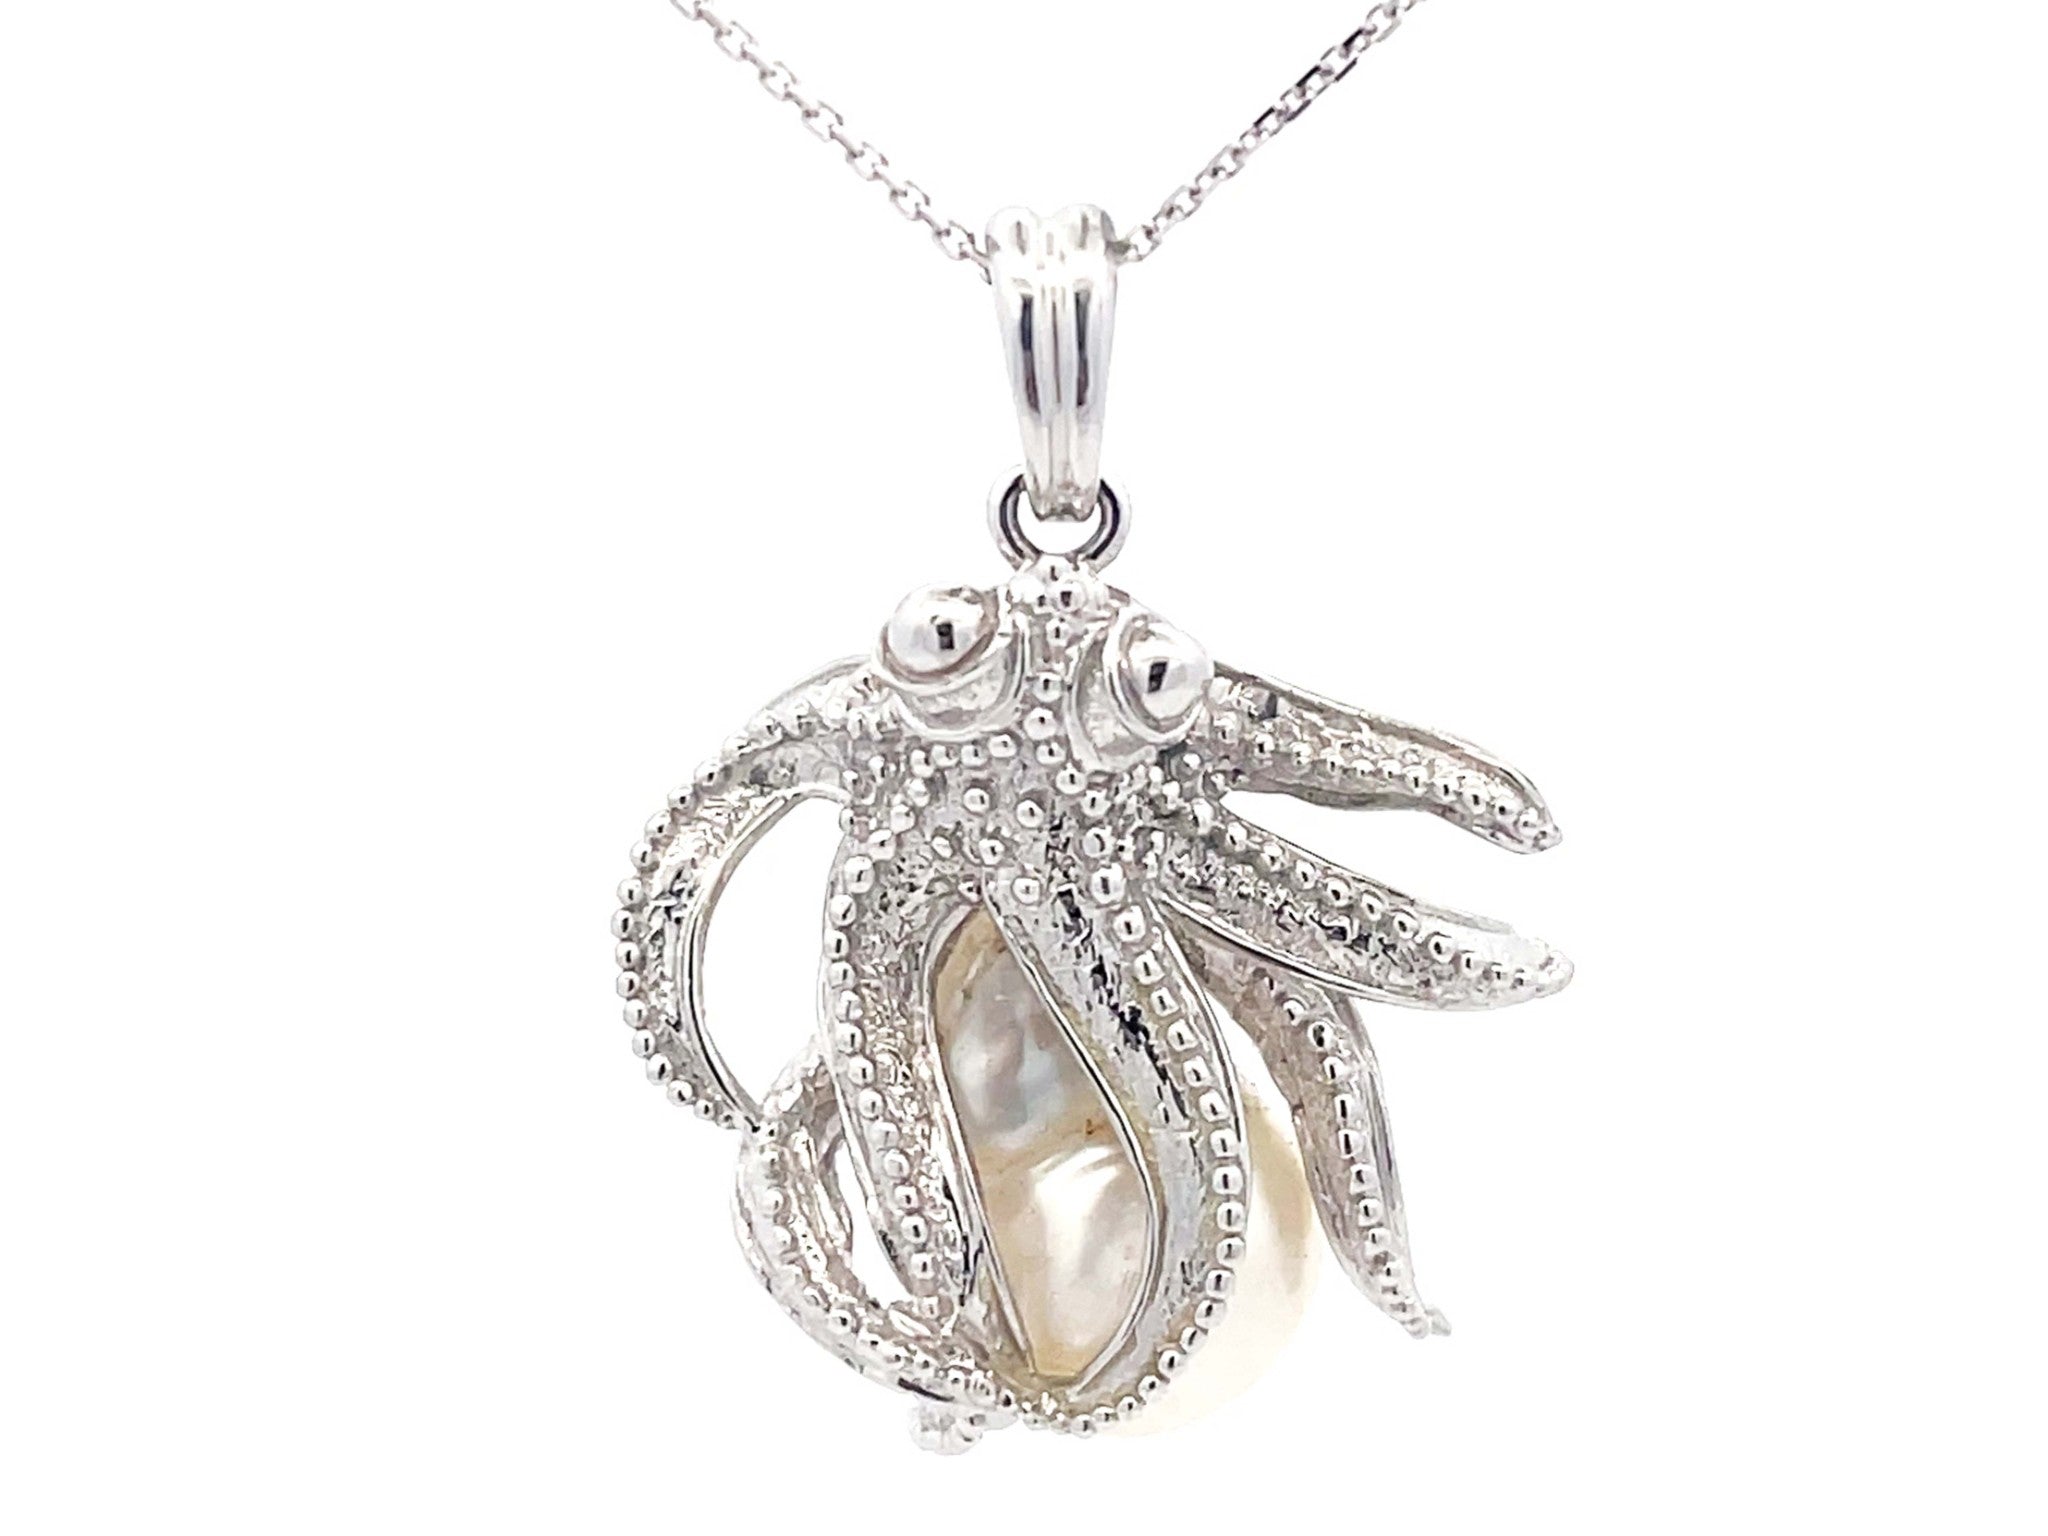 Assor Gioielli Octopus Baroque Pearl Pendant on Chain in 18k White Gold